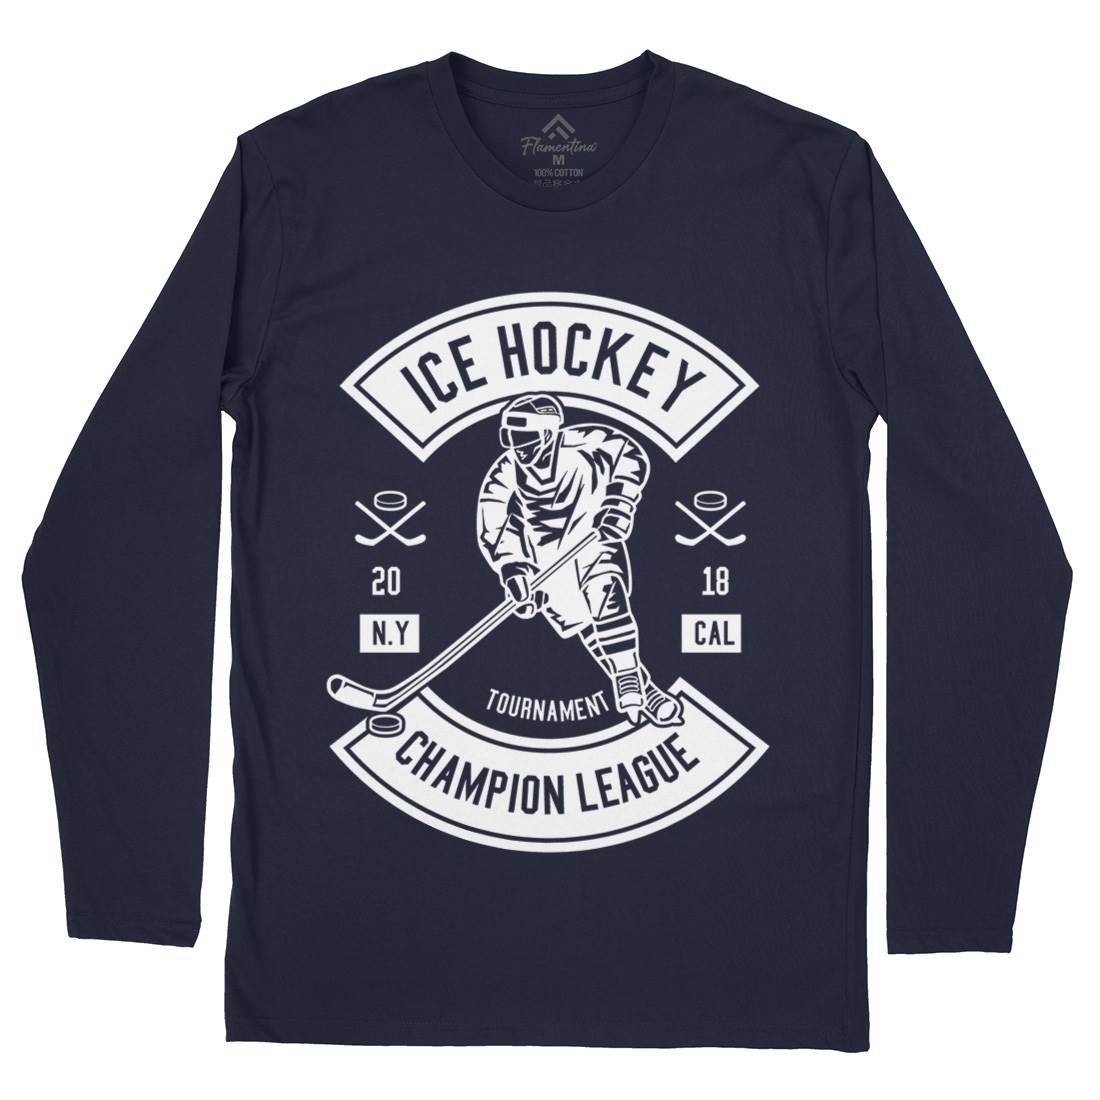 Ice Hockey Champion League Mens Long Sleeve T-Shirt Sport B564